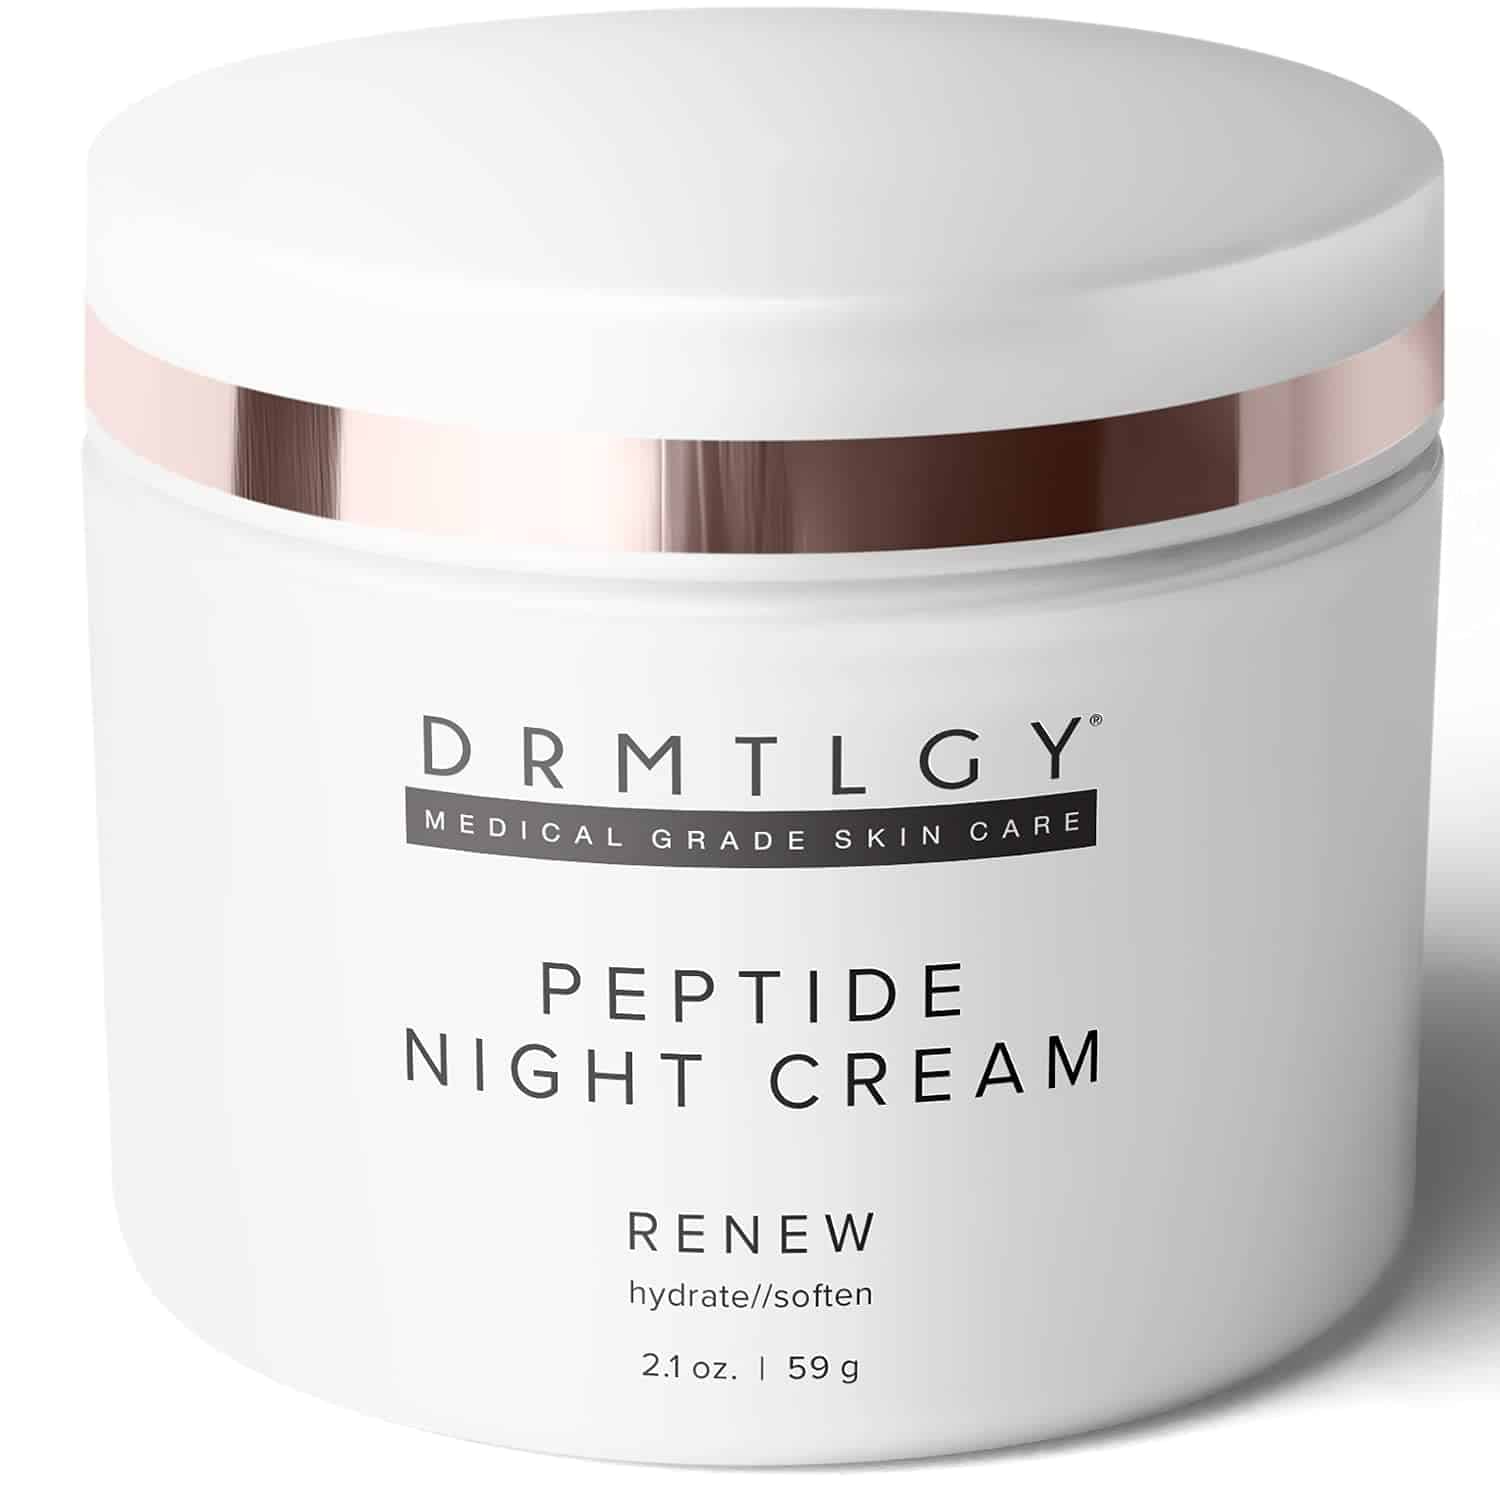 DRMTLGY Peptide Night Cream